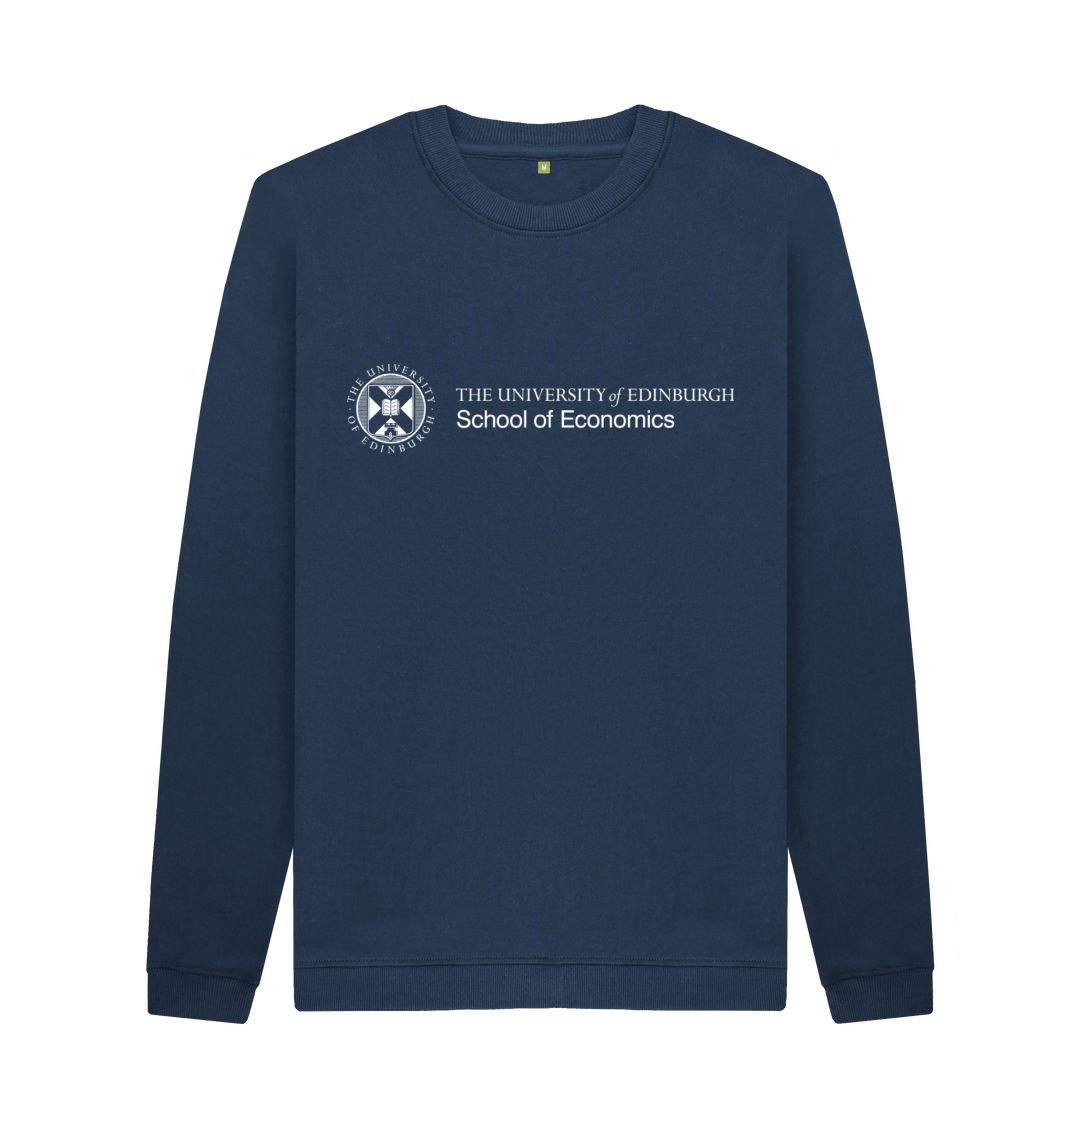 Navy Sweatshirt with white University crest and text that reads ' University of Edinburgh School of Economics